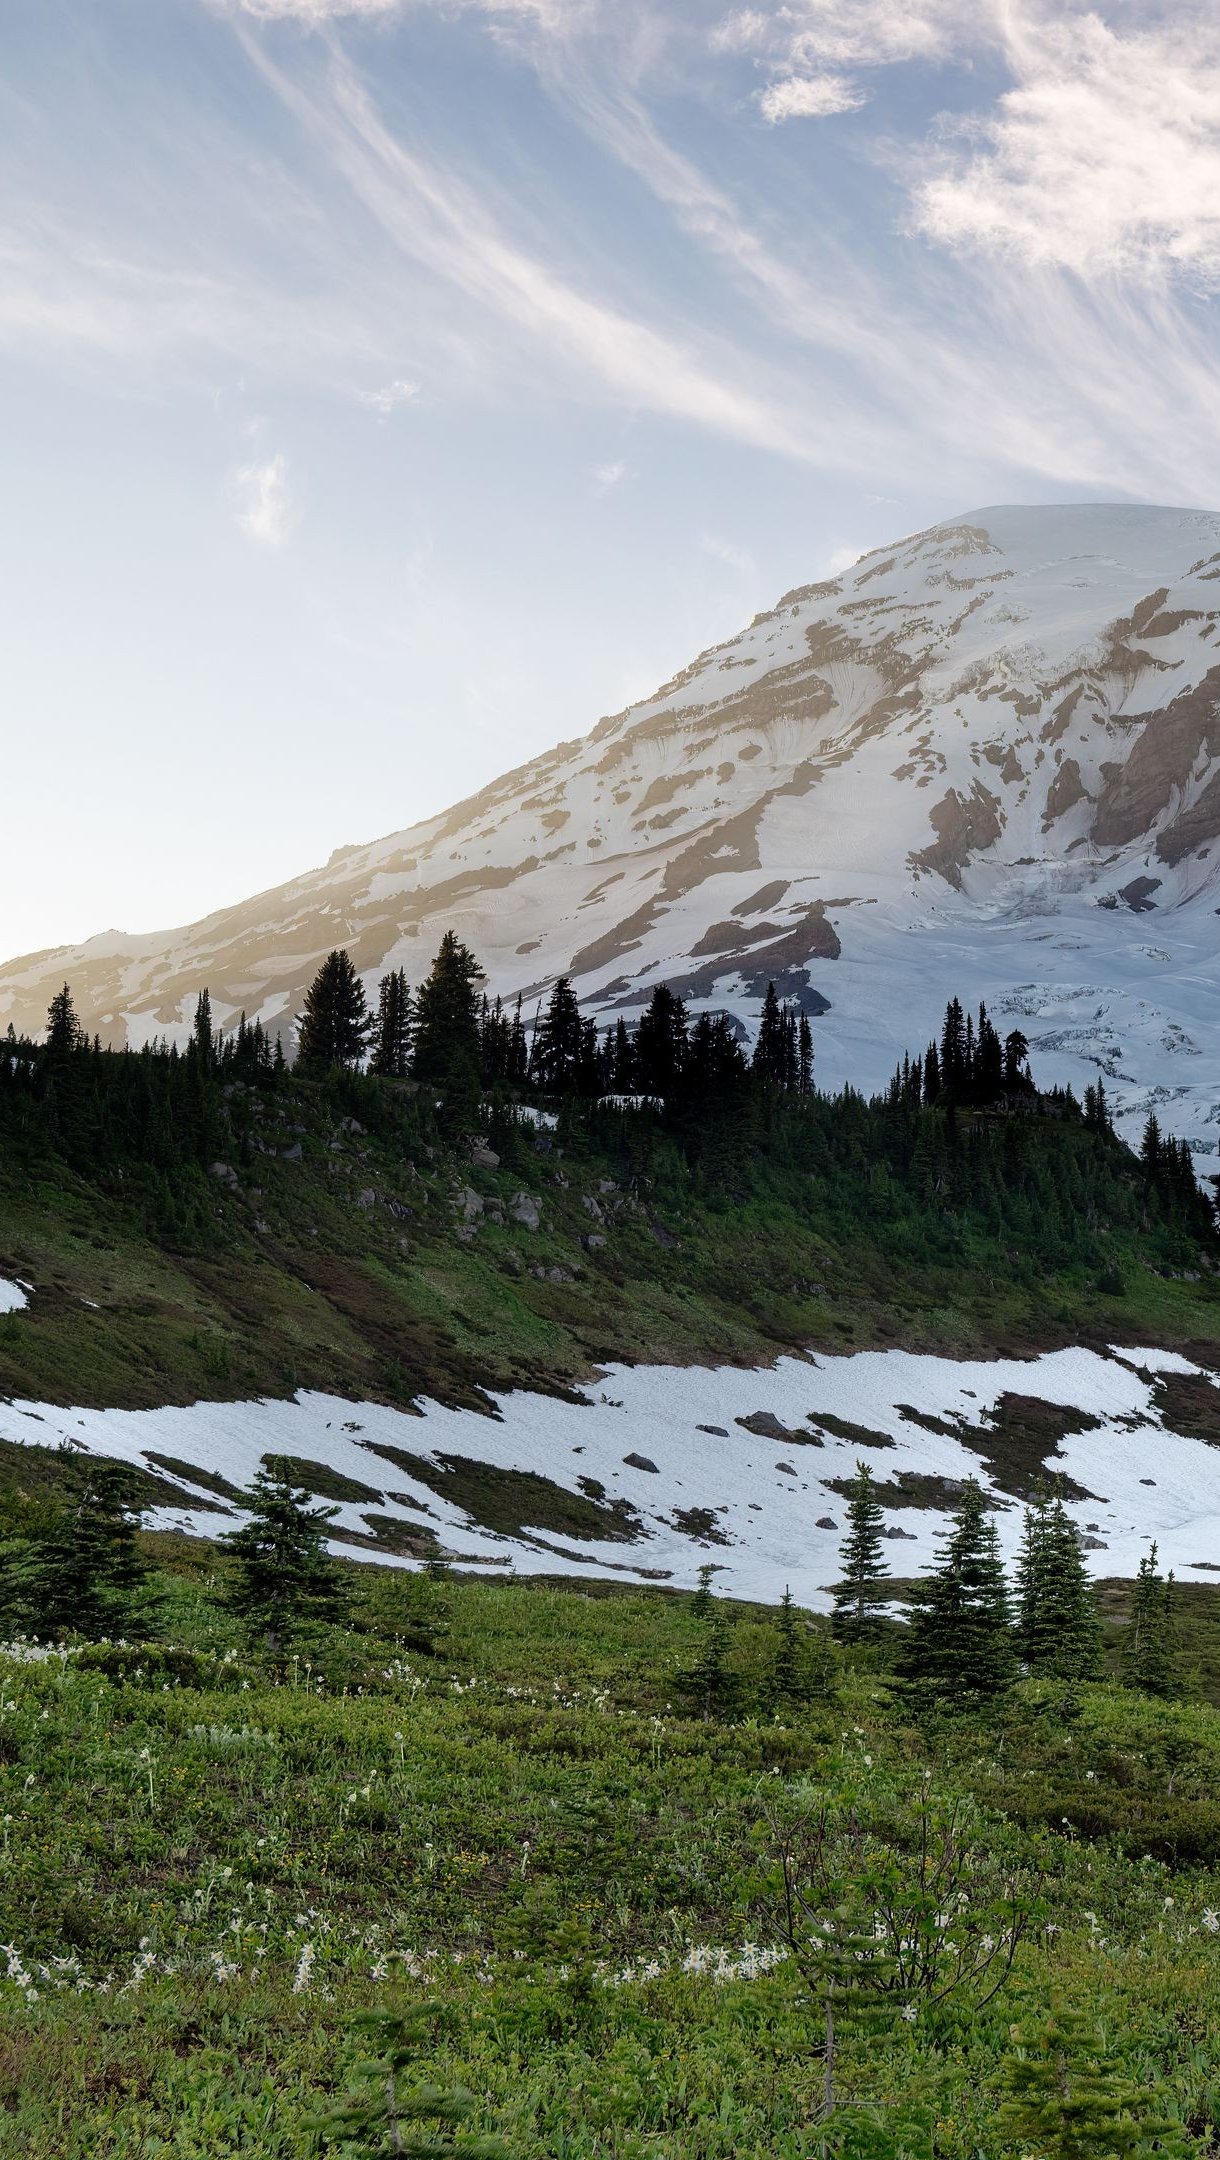 Fondos de pantalla Bosque con montaña de fondo y nieve Vertical